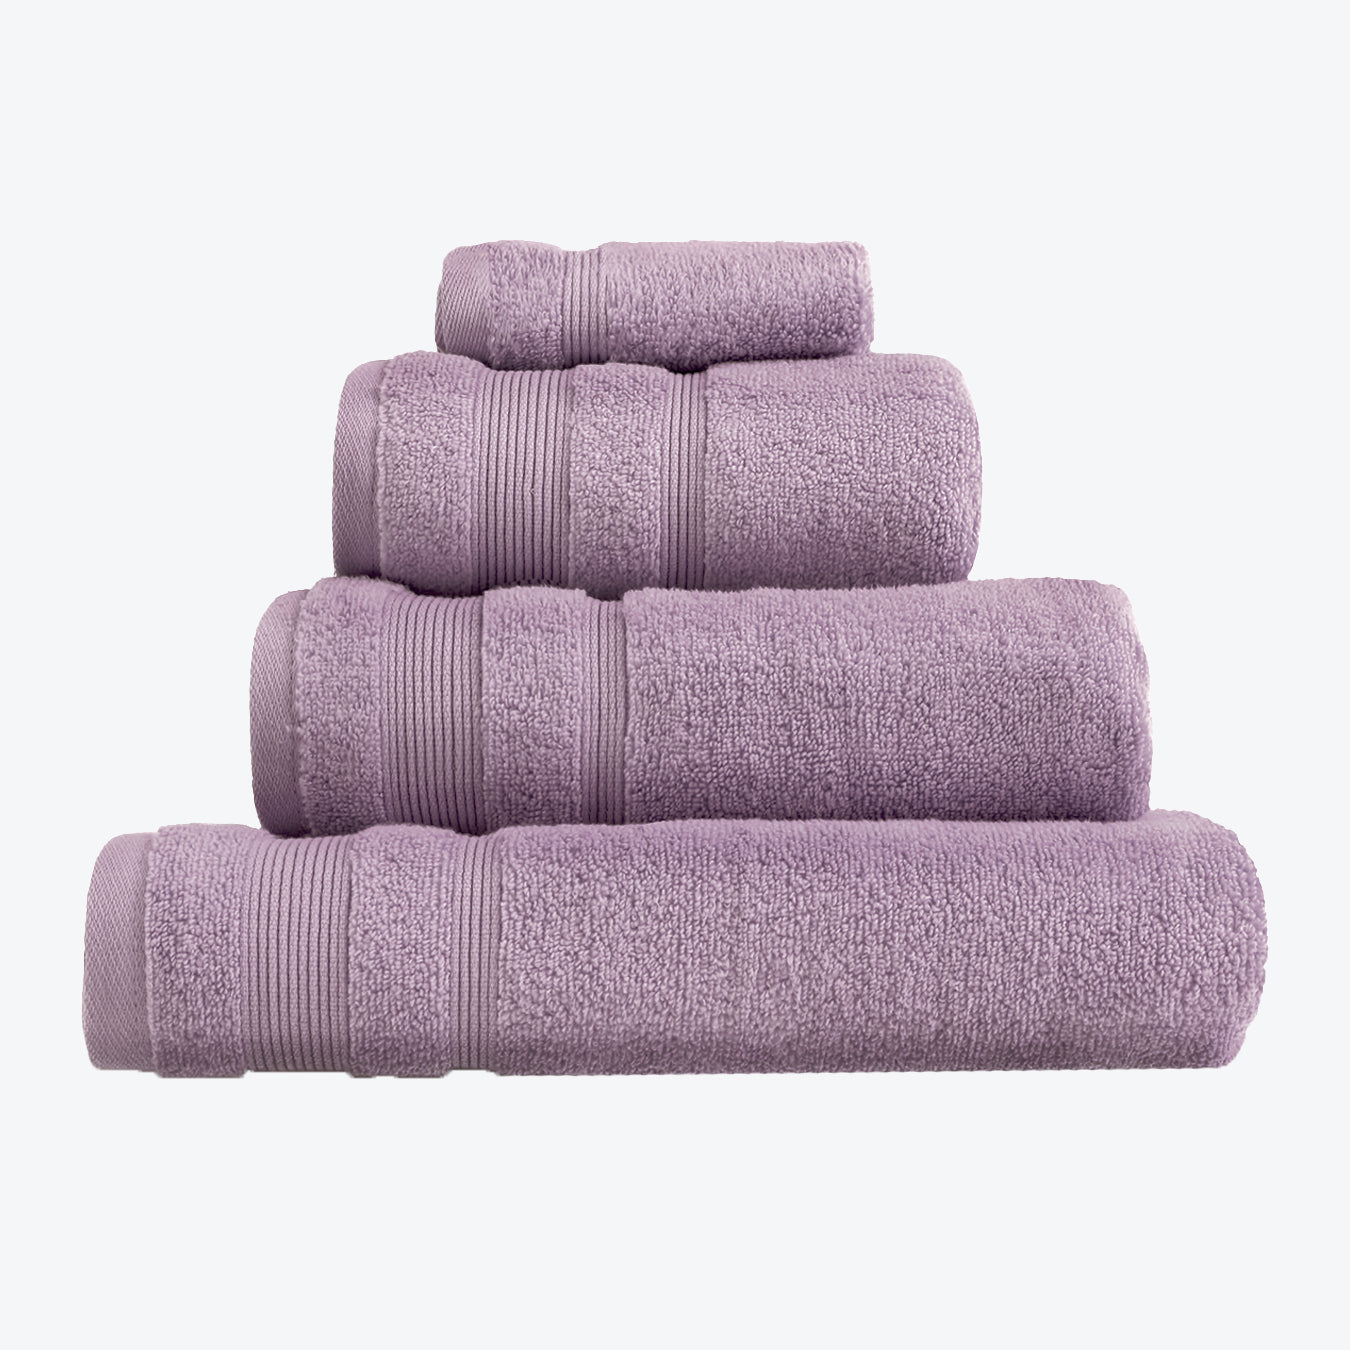 Heather Lilac Egyptian Cotton Towel Bale Set - Premium Zero Twist Bathroom Towels (Hand Towel, Bath Towel, Bath Sheet, face Cloths).